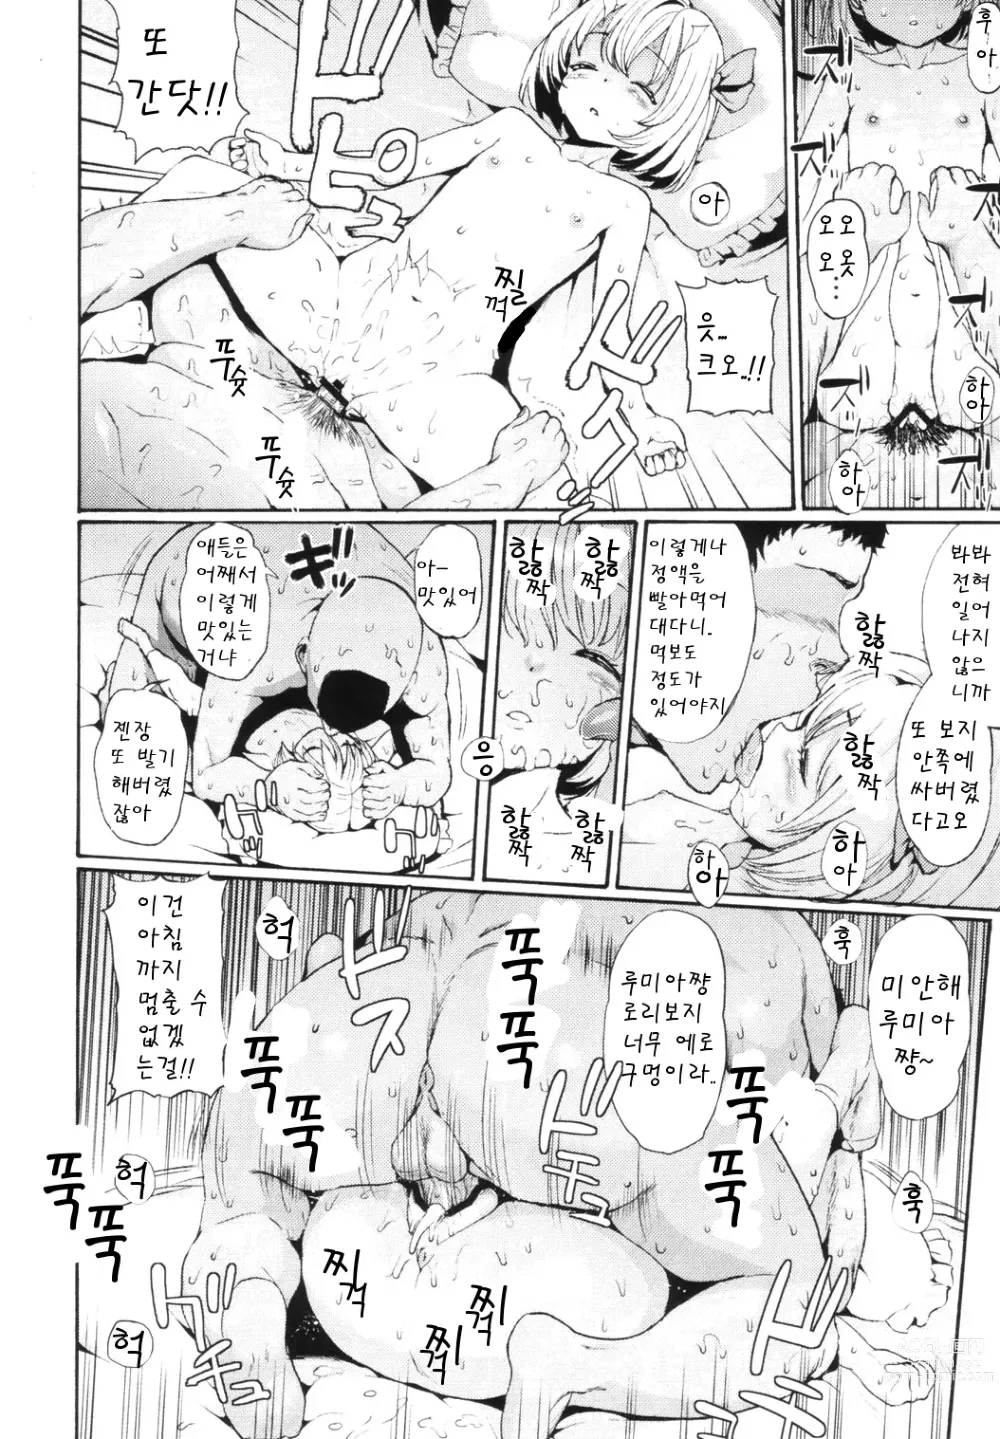 Page 4 of doujinshi 밥을 먹인 후엔...